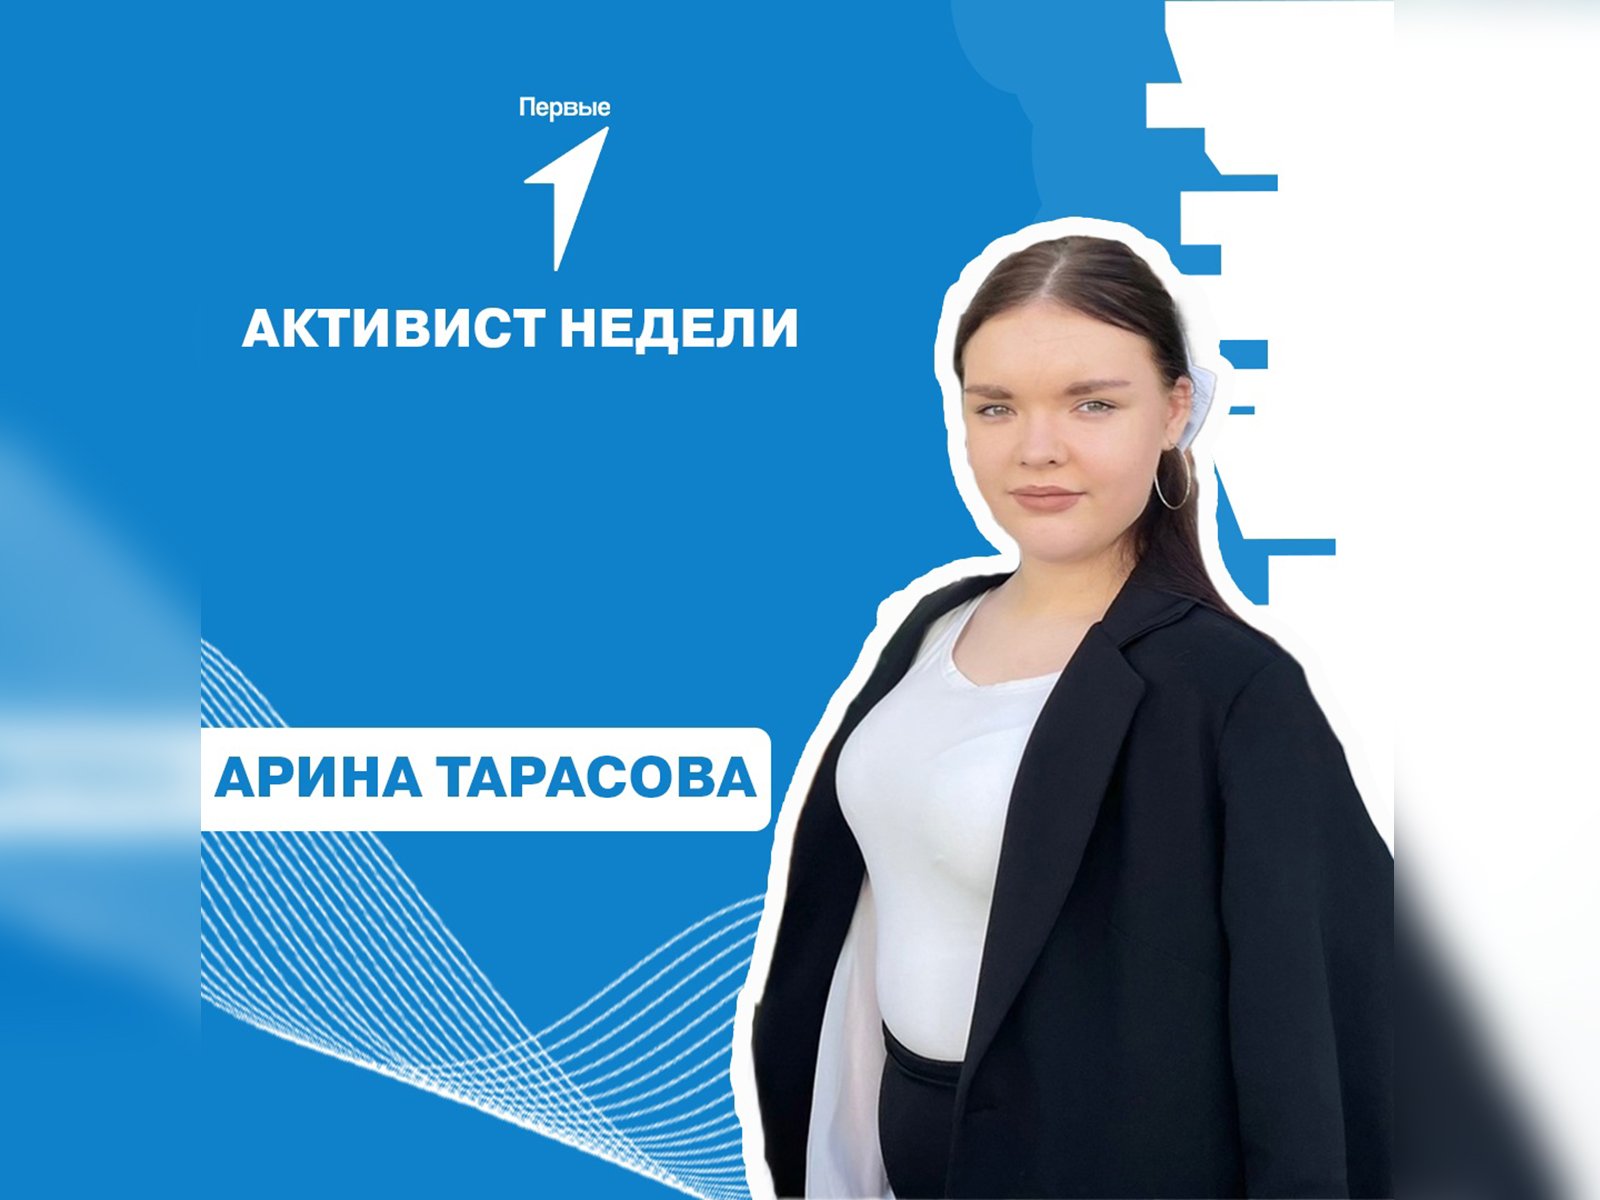 Тарасова Арина в рубрике «Активист недели».